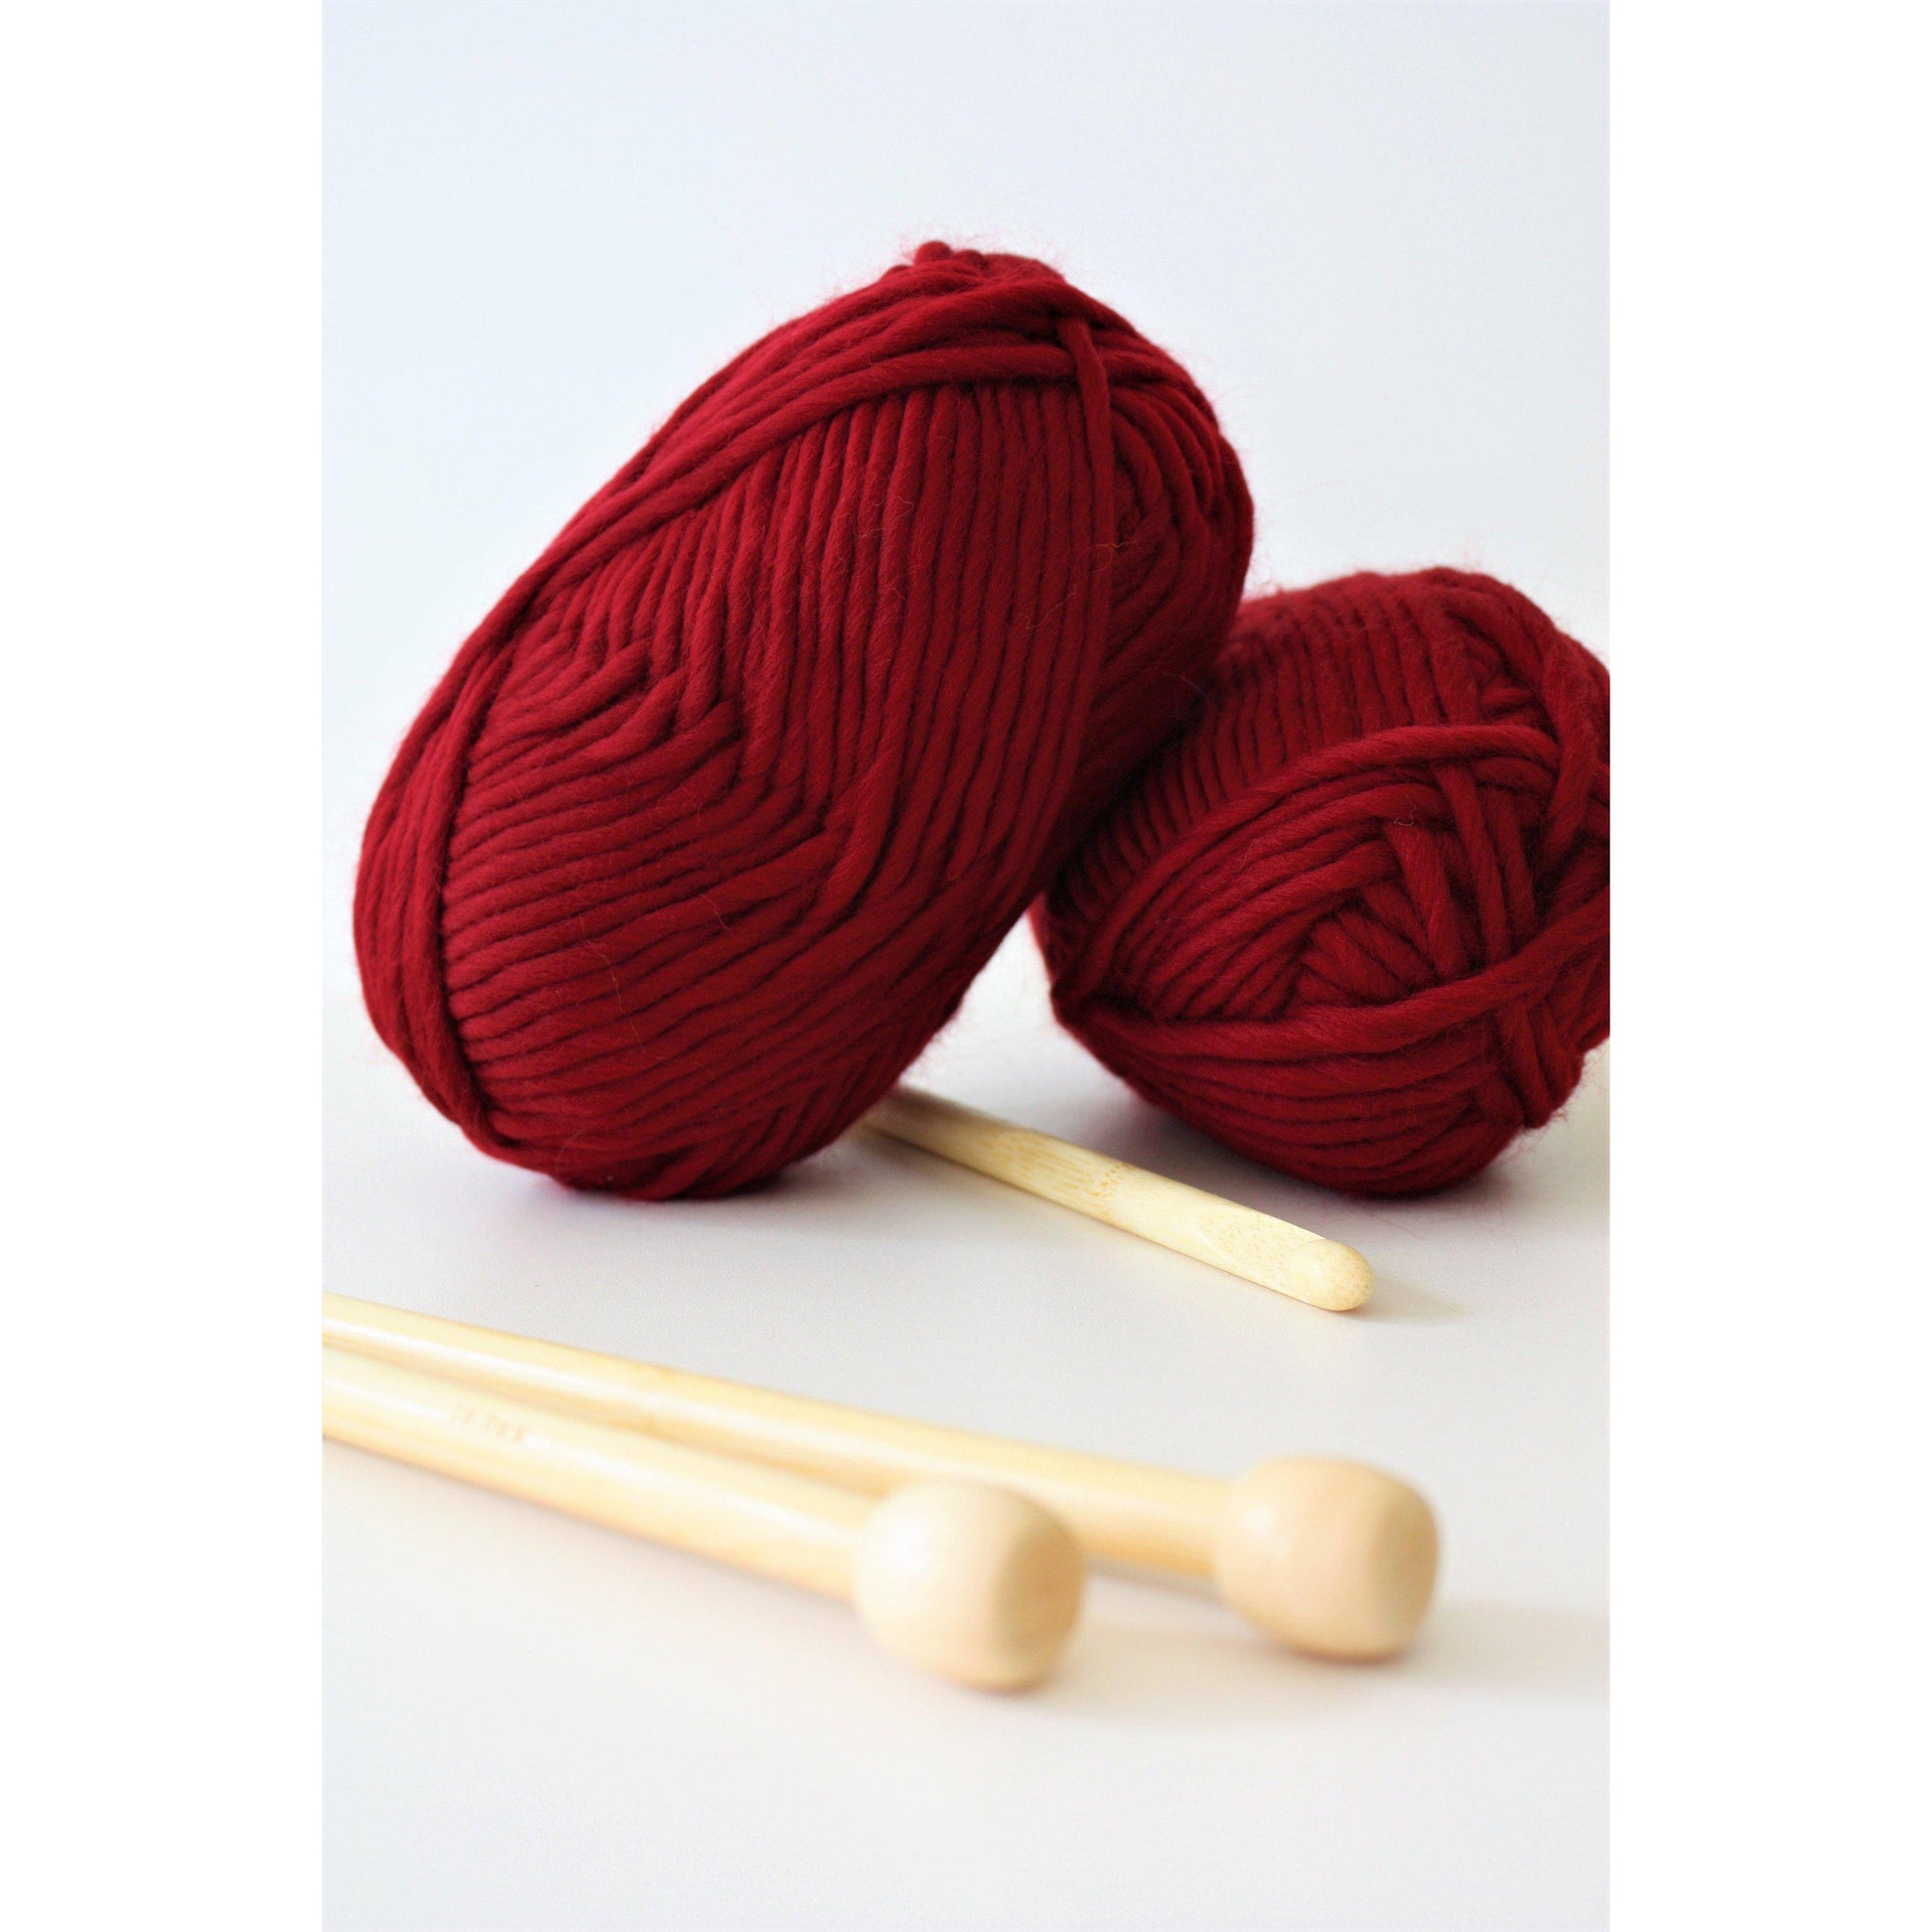 Find Quality Knitting Supplies at South Jordan Yarn Shops